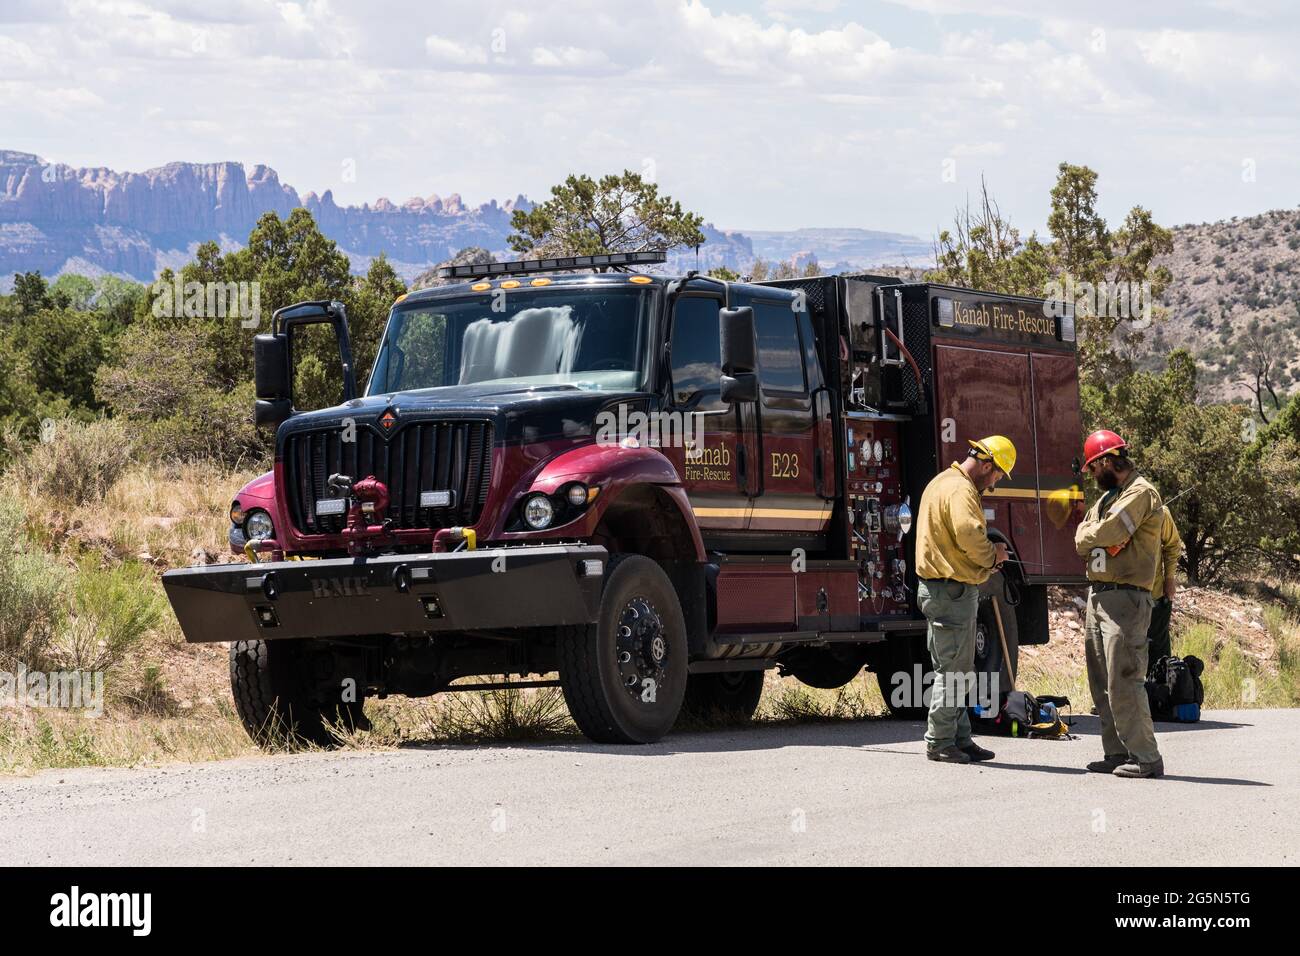 A heavy-duty International HV firefighting water tender truck on a the Pack Creek Fire in Utah. Stock Photo